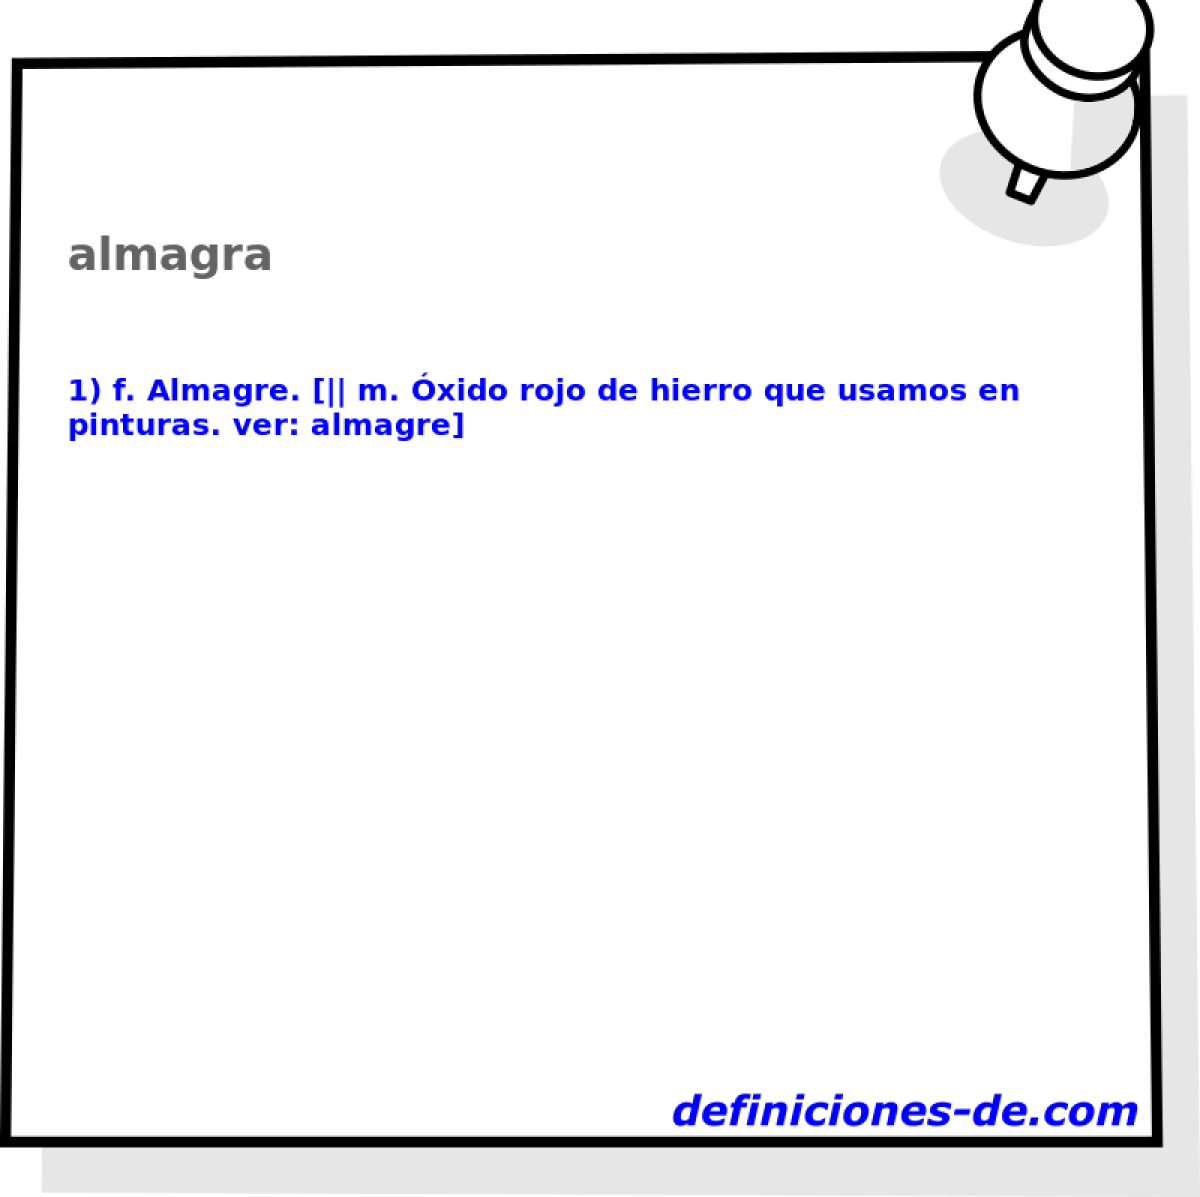 almagra 